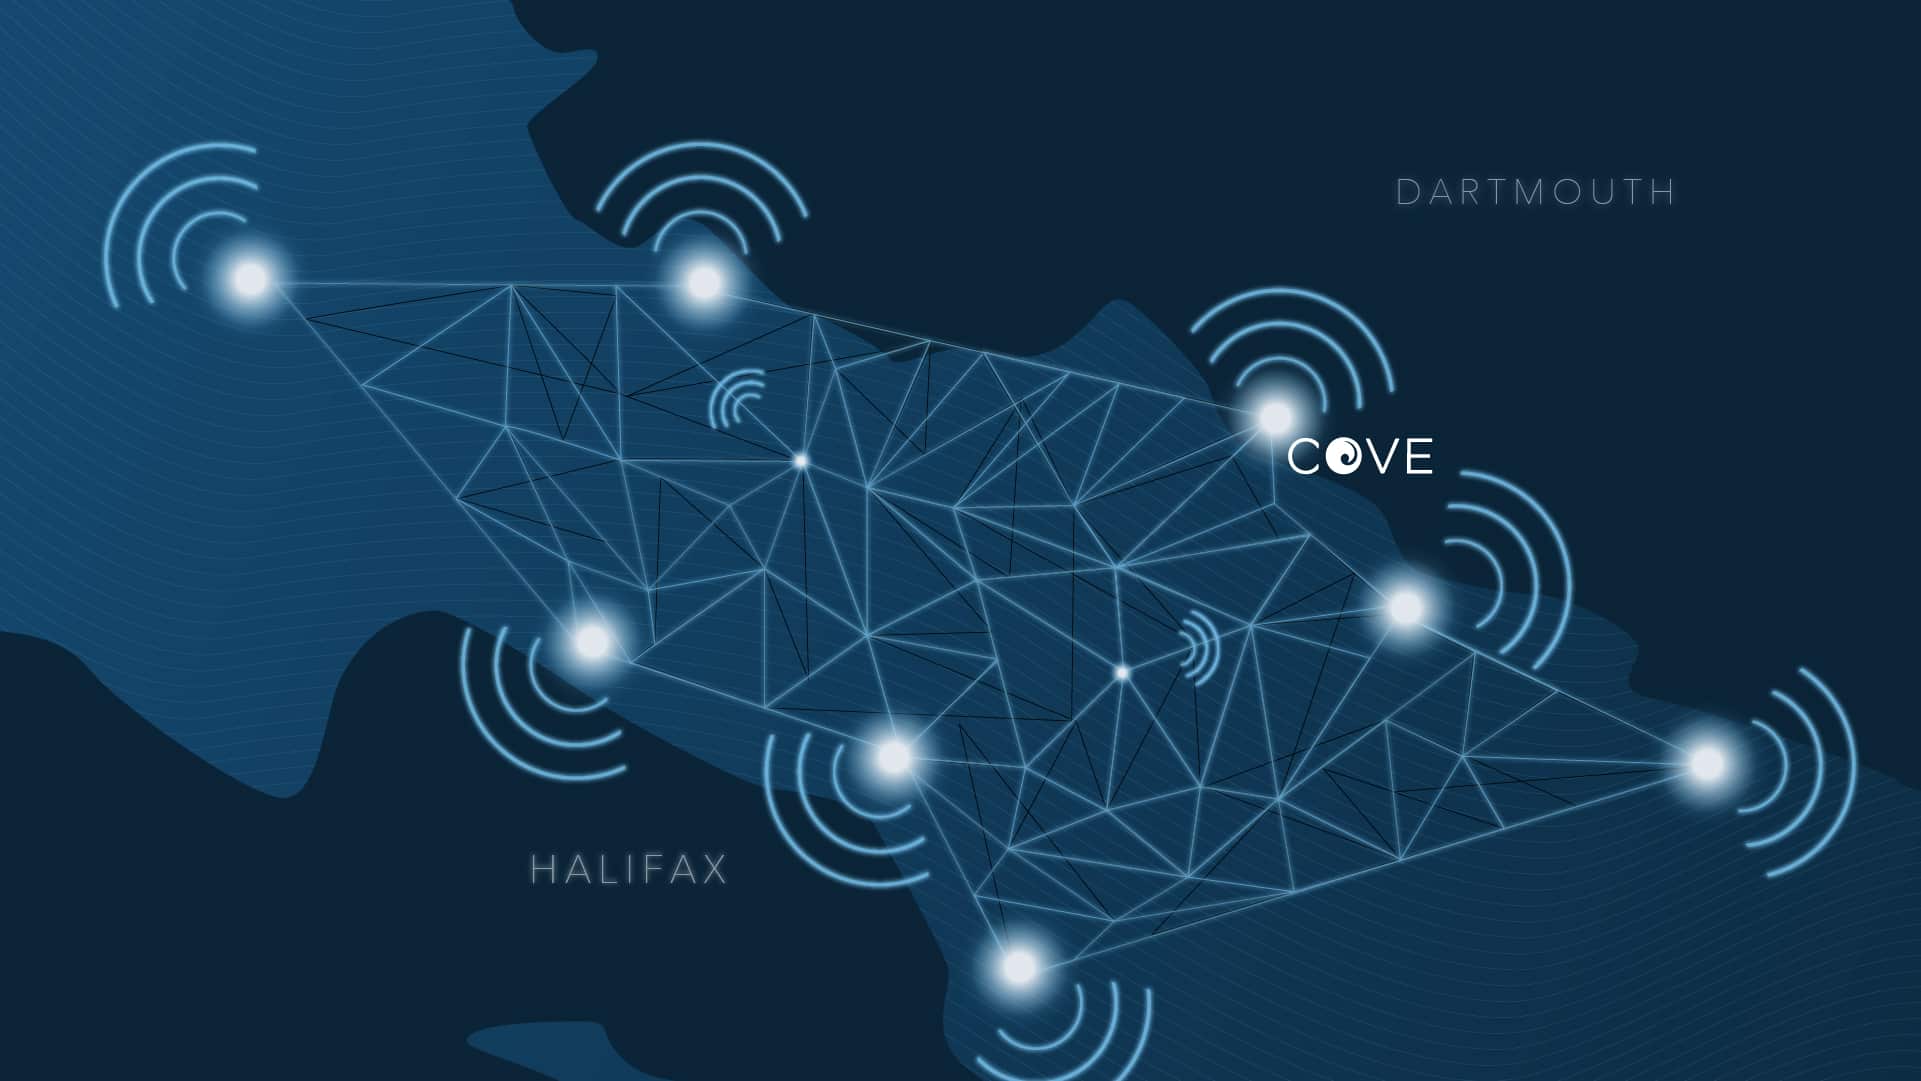 Digital image of Halifax harbour